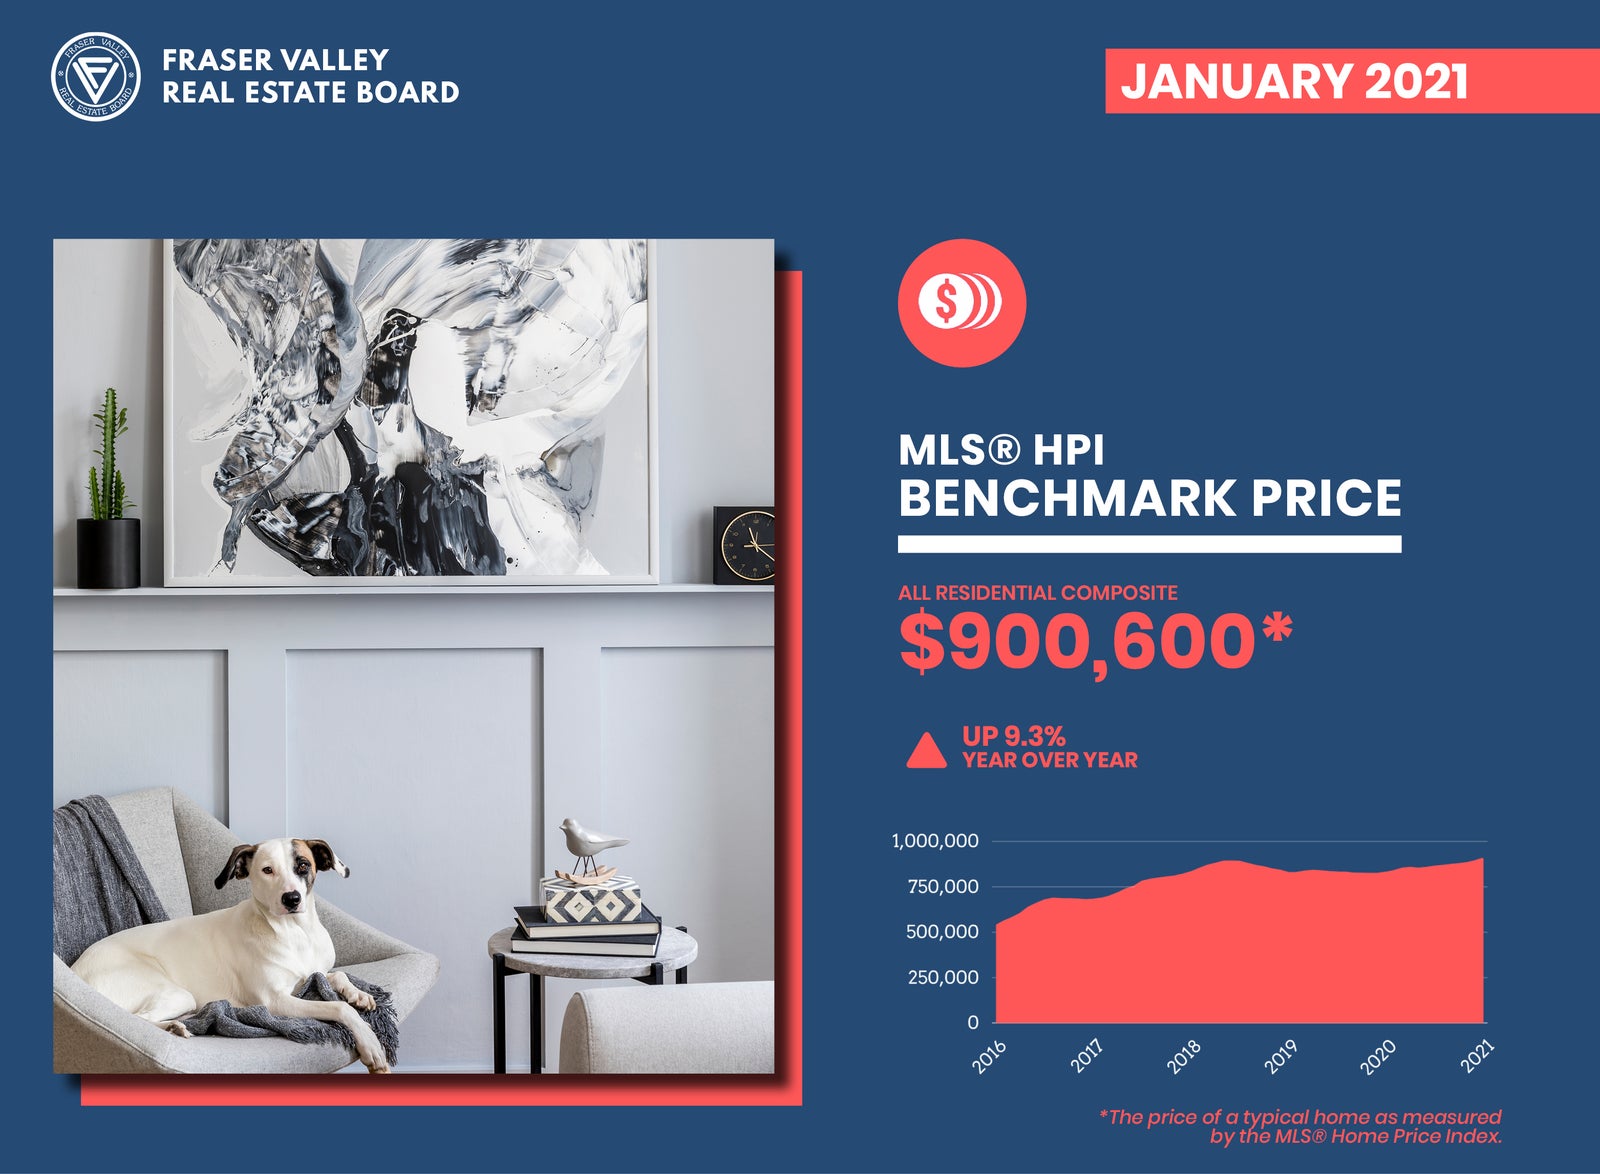 Fraser Valley Real Estate Board - Benchmark Price January 2021